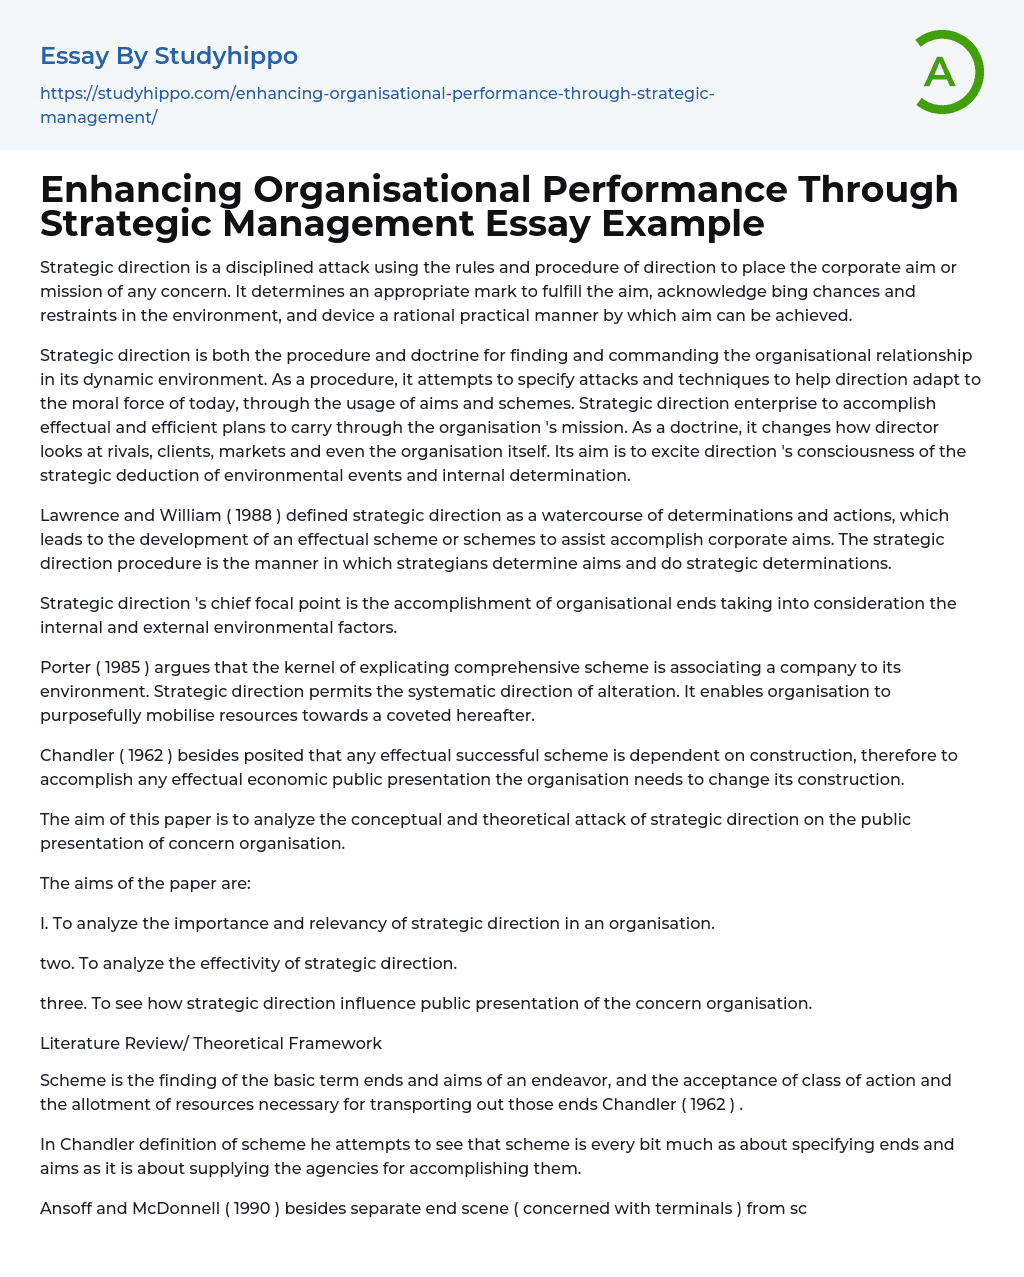 Enhancing Organisational Performance Through Strategic Management Essay Example